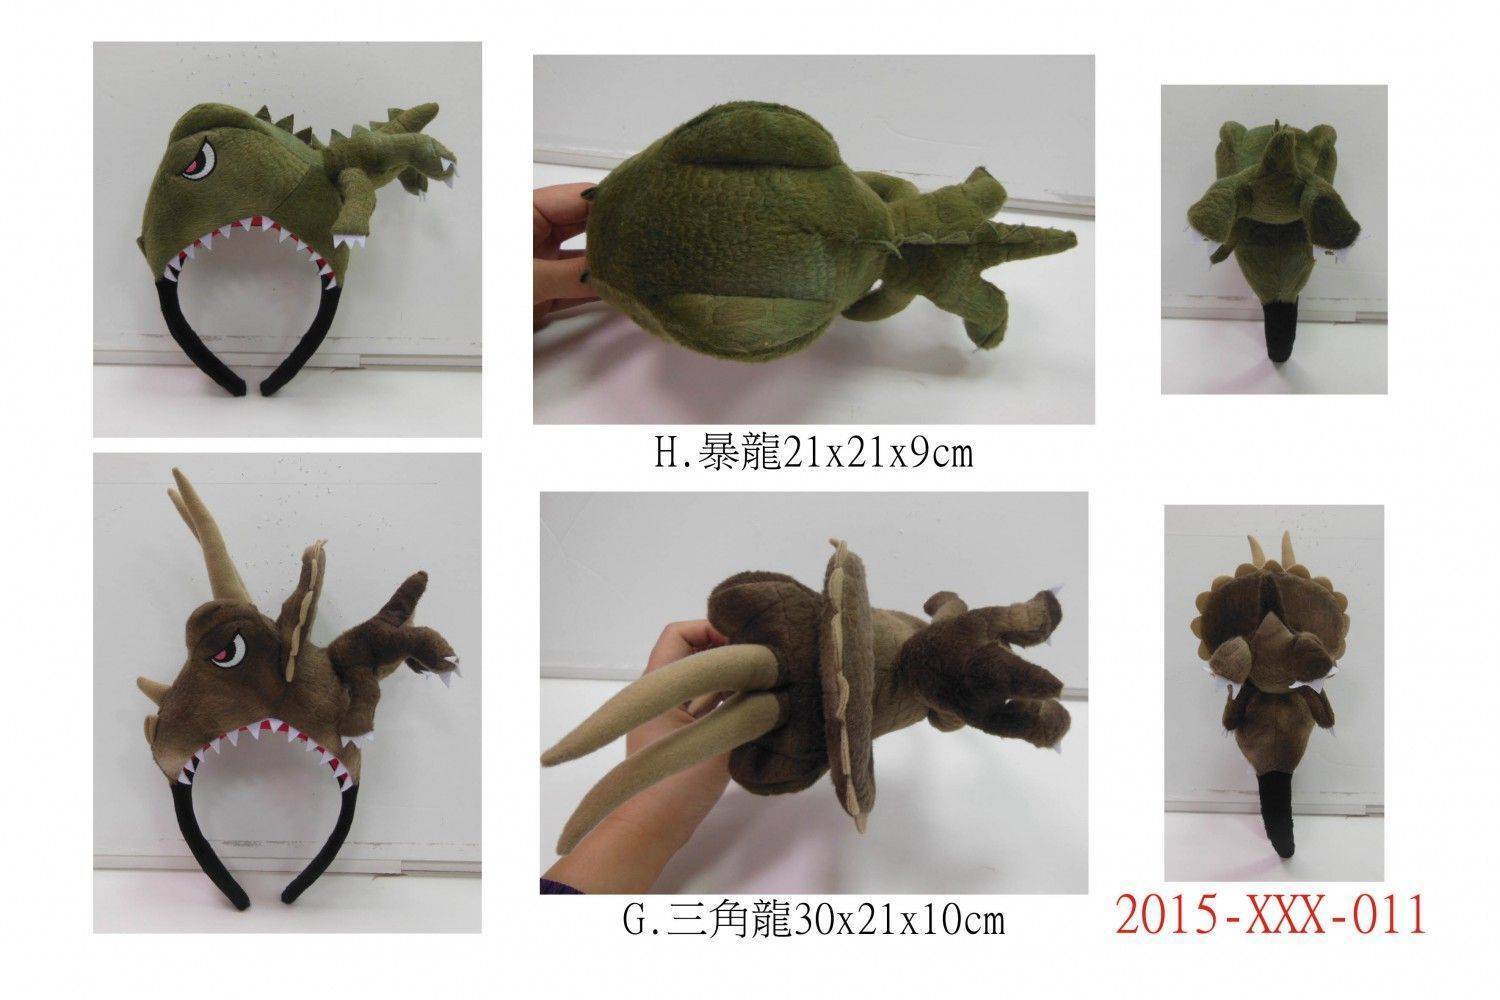 2015-XXX-011A-H動物造型髮箍 G.三角龍30x21x10cm H.暴龍21x21x9cm